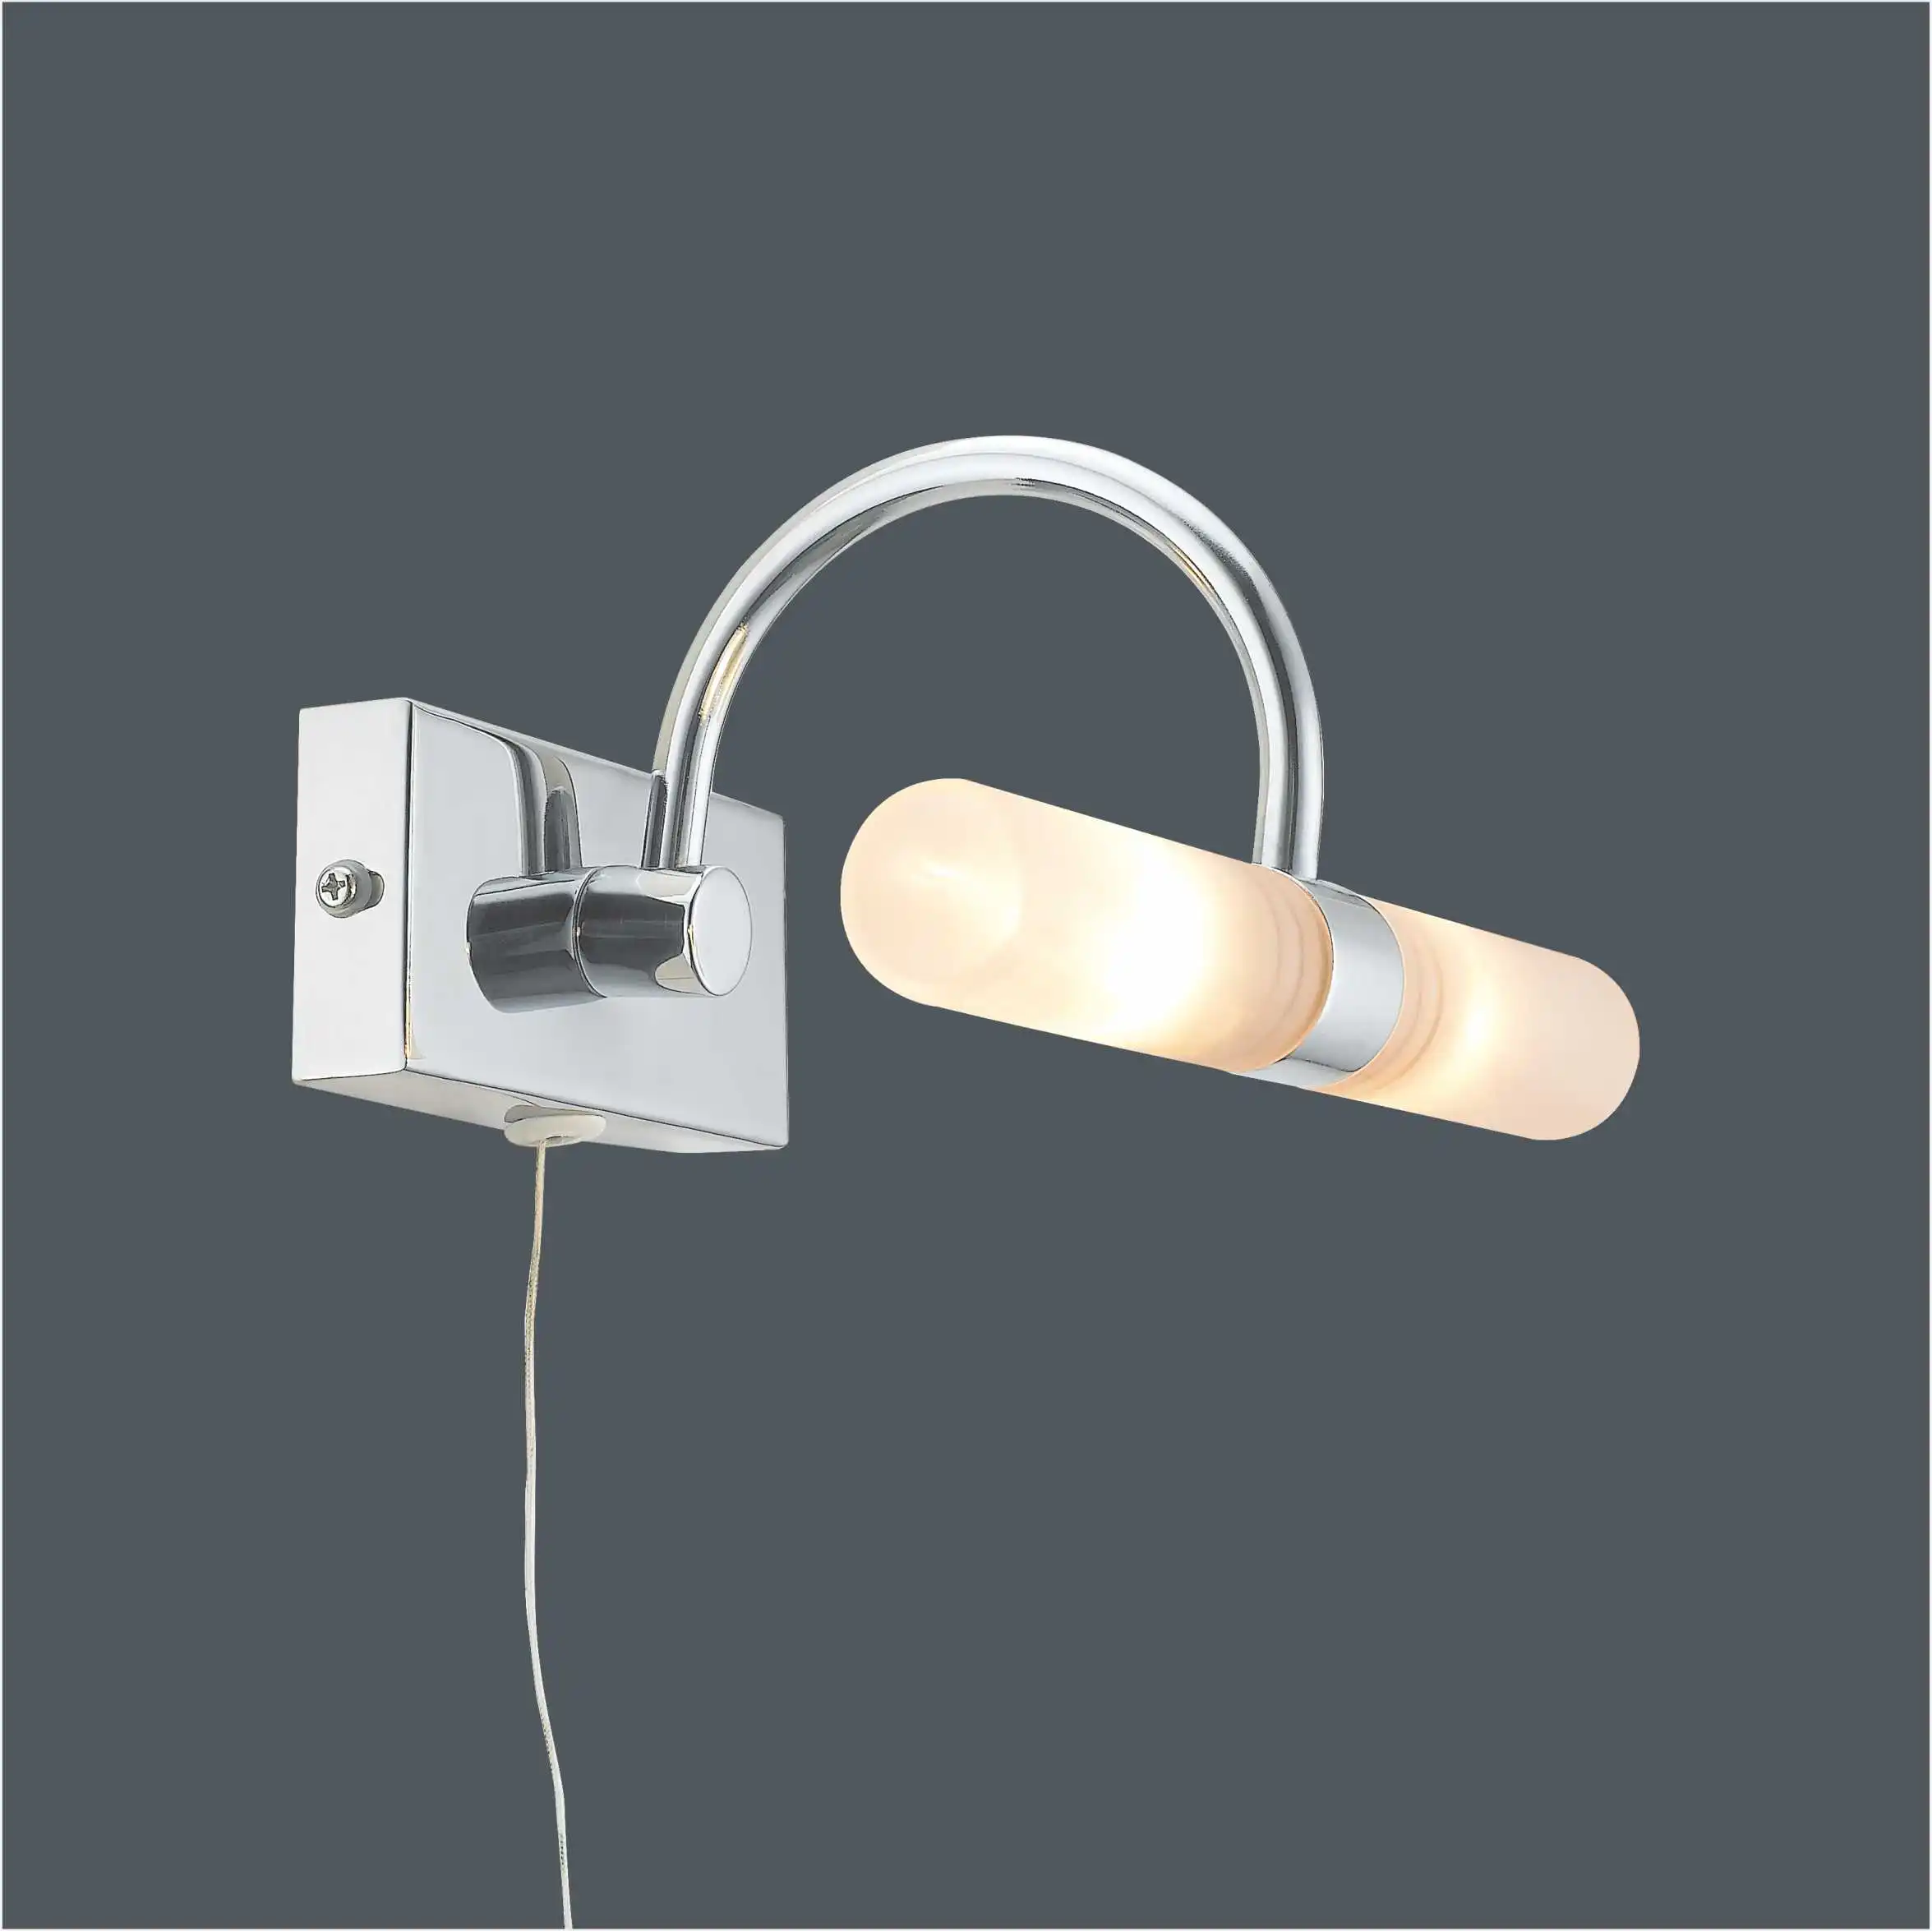 Ip44 Pull Cord Switch Led Bathroom Mirror Light Vanity Light Washroom Light 6888 Buy Ip44 Led Bathroom Light